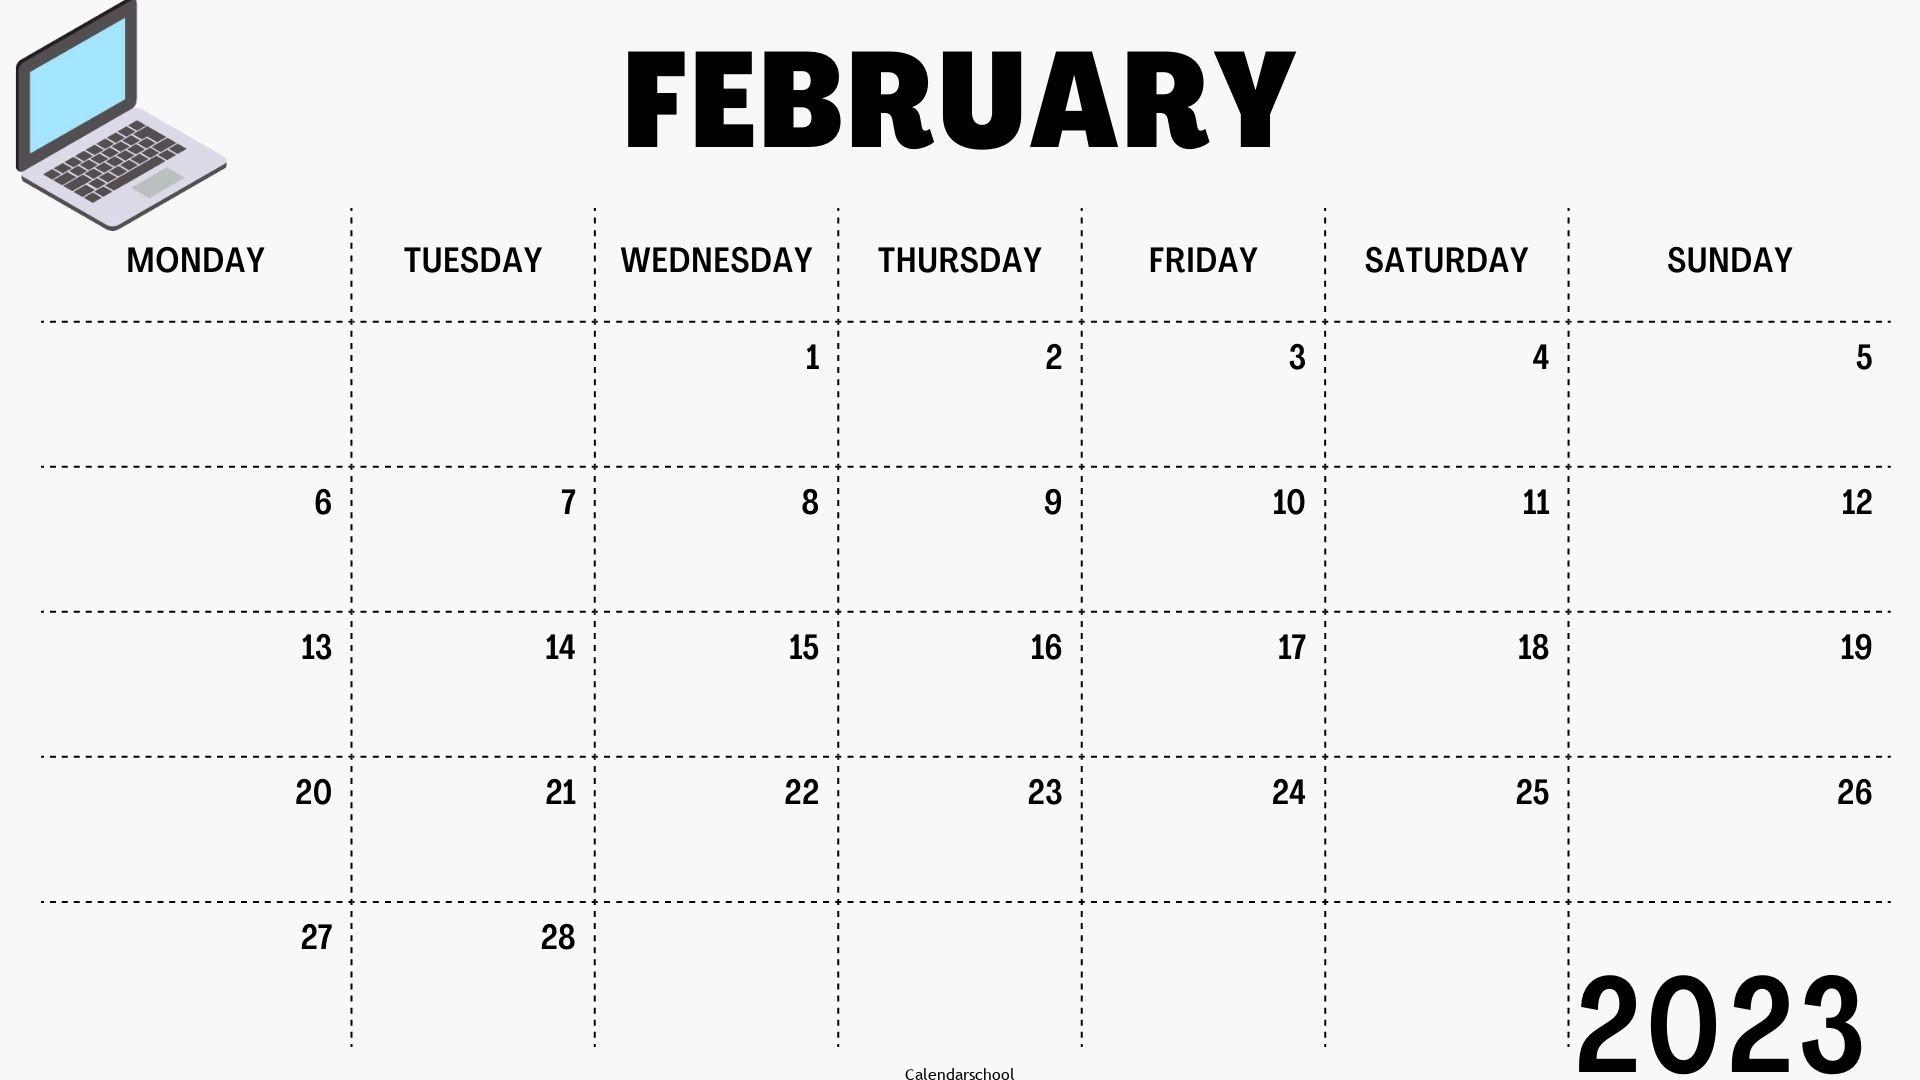 Calendar February 2023 Horoscope